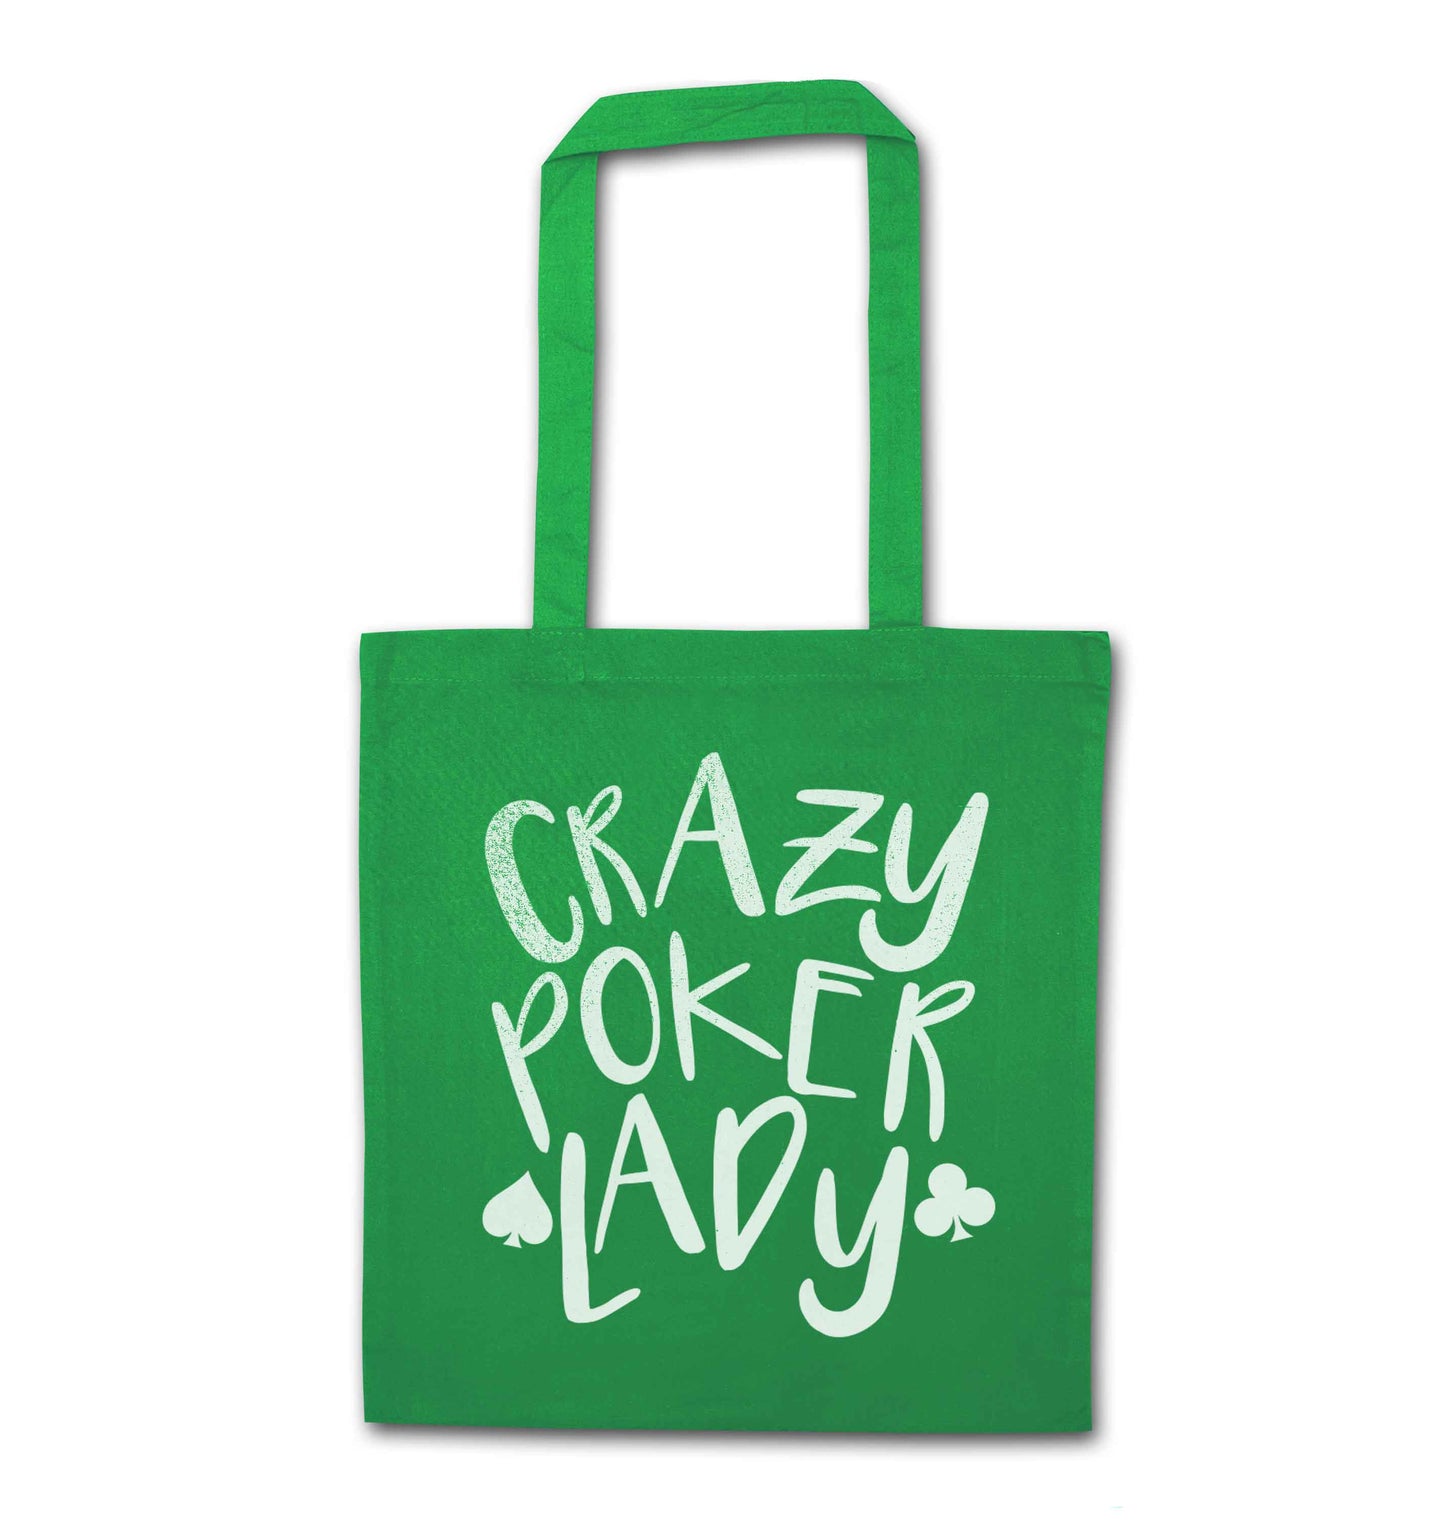 Crazy poker lady green tote bag